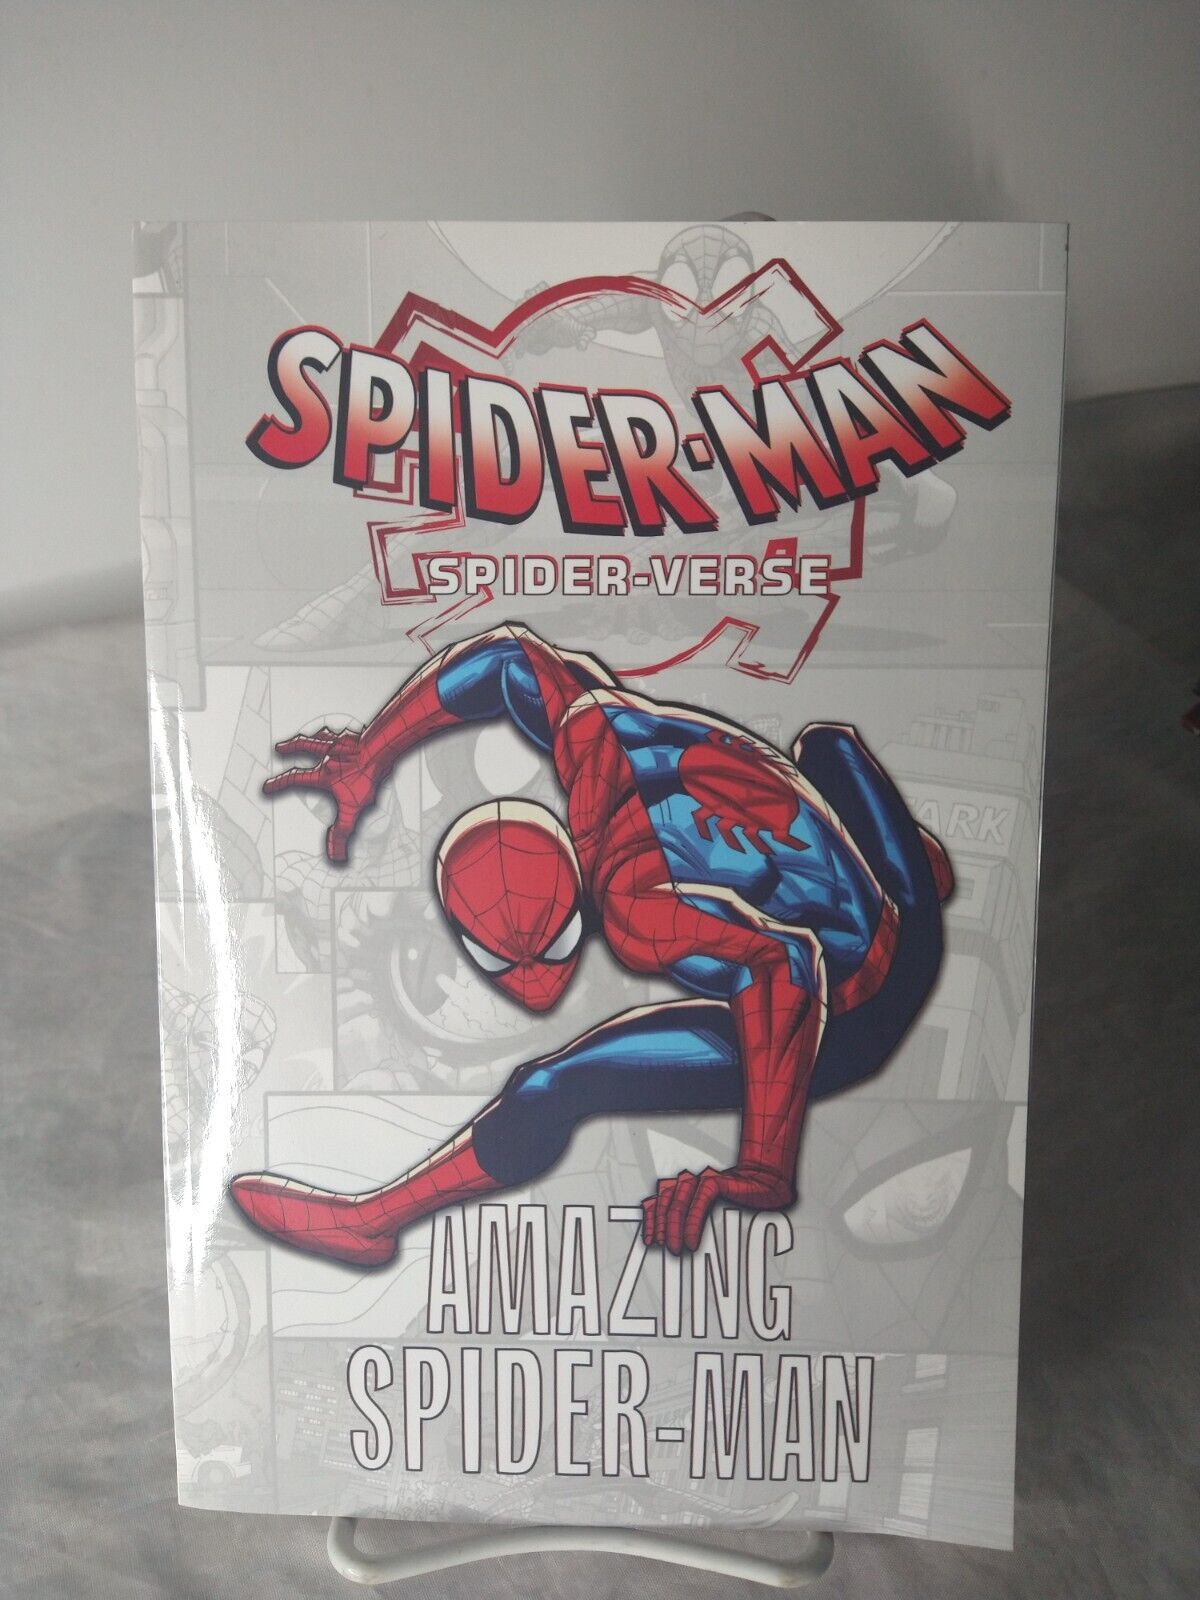 Spider-Man Spider-Verse: Amazing Spider-Man Trade Paperback Marvel Comics New